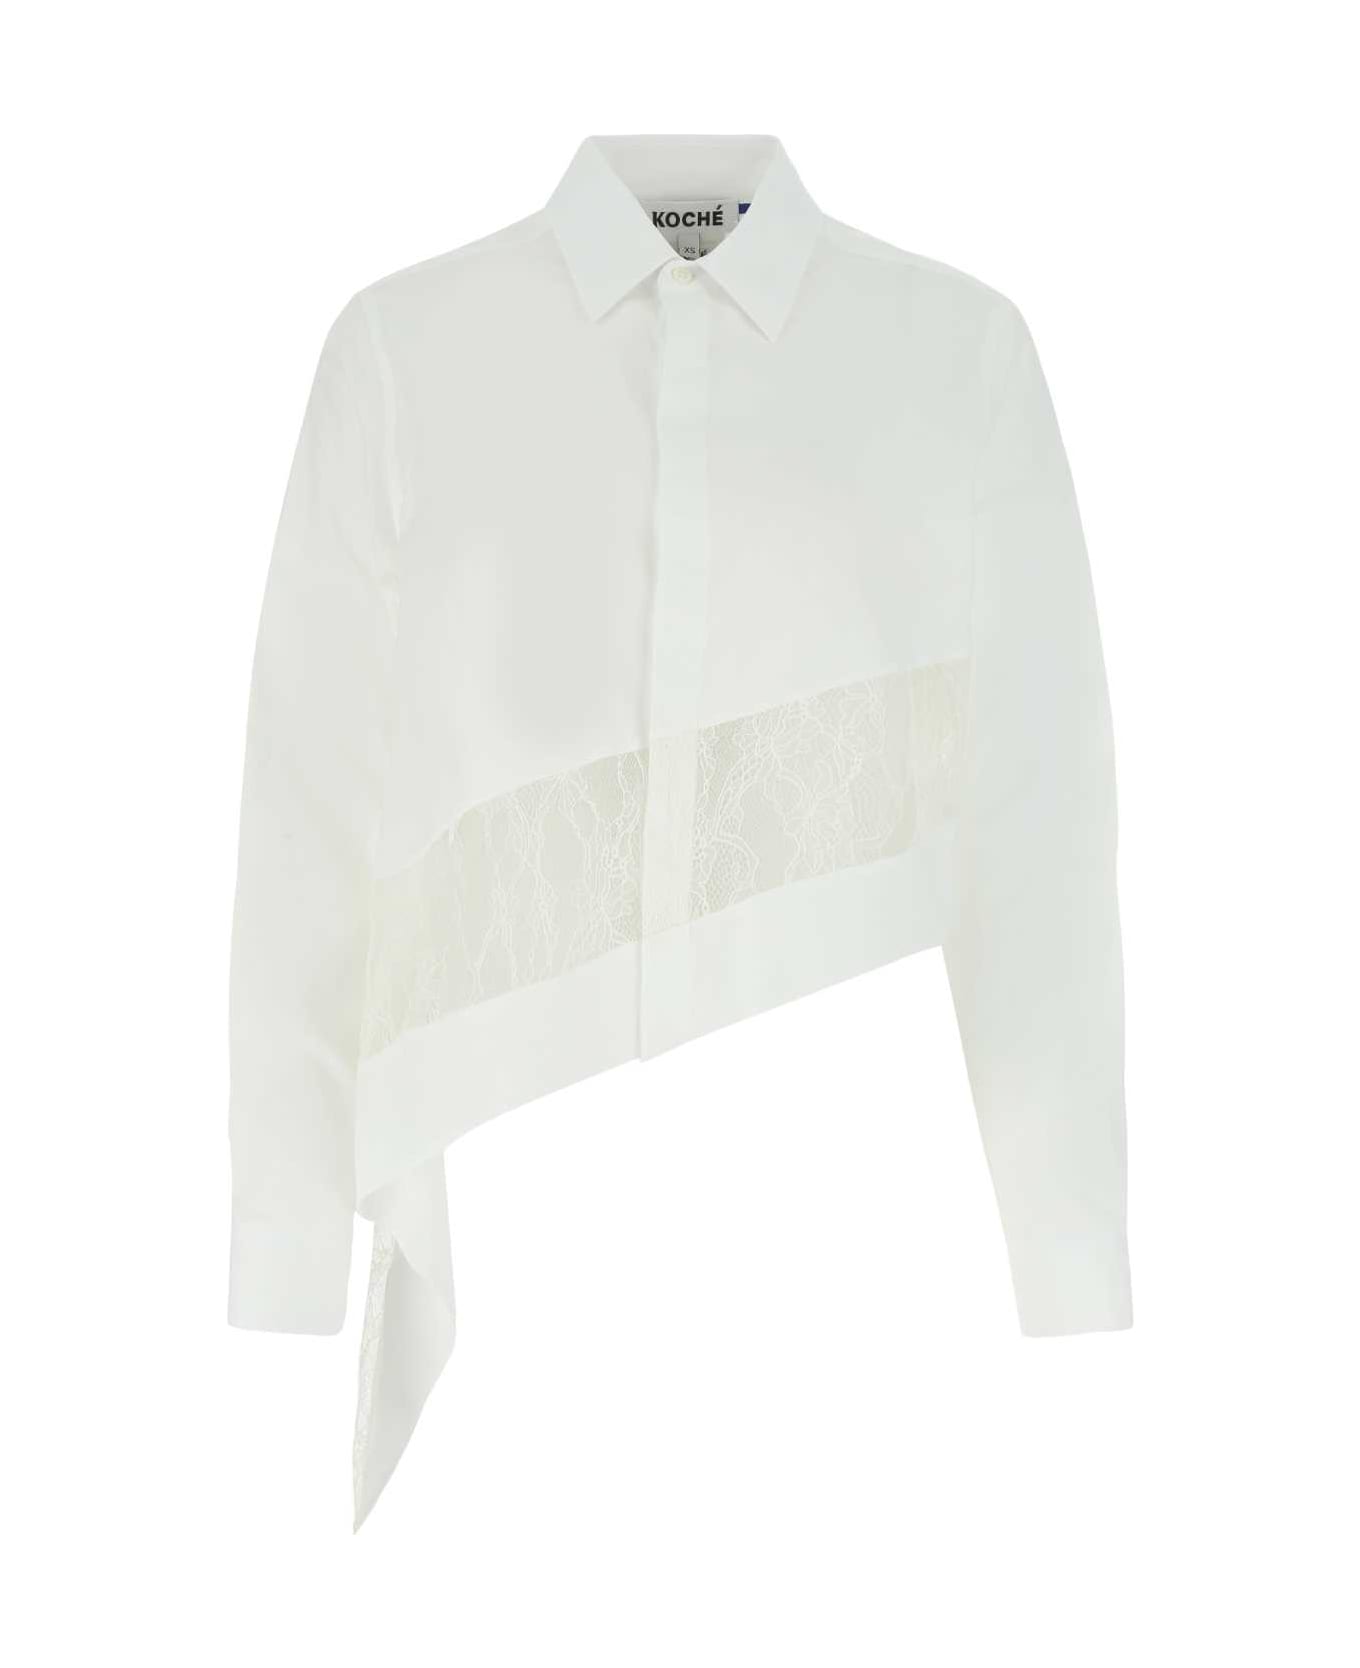 Koché White Cotton And Lace Shirt - 100